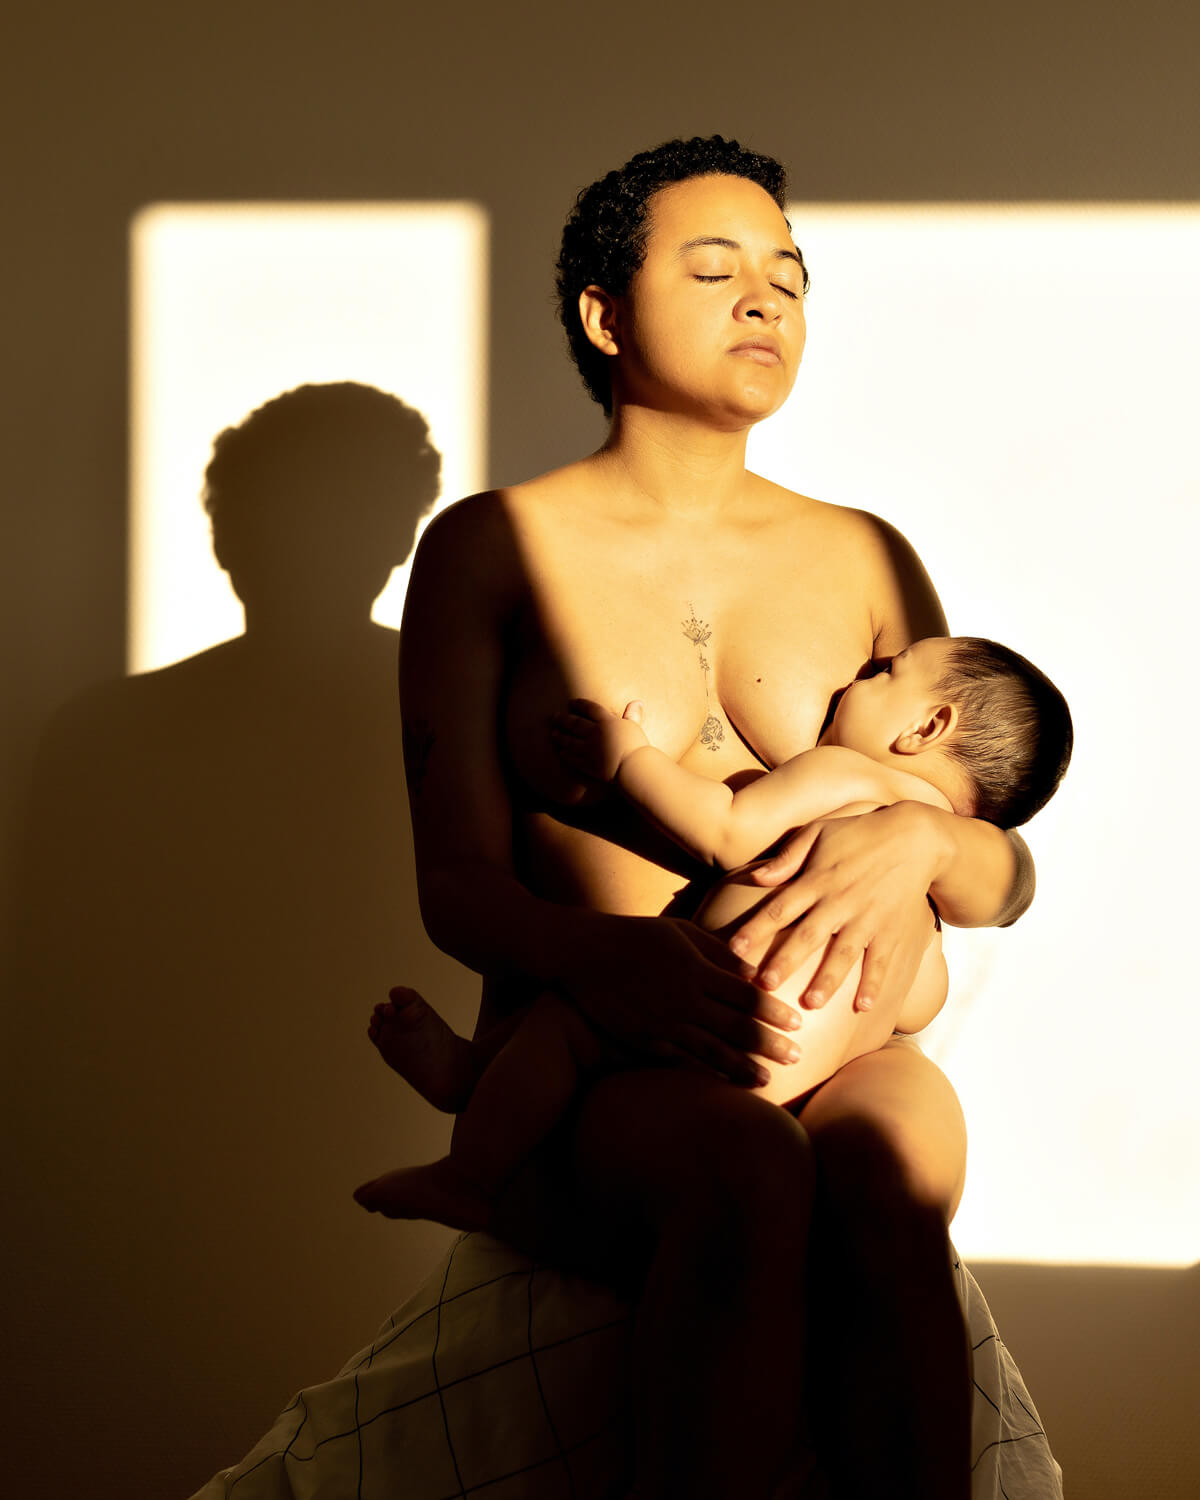 Mama Glow - Mama Glow - Pleasure During Birth. The nipples are a